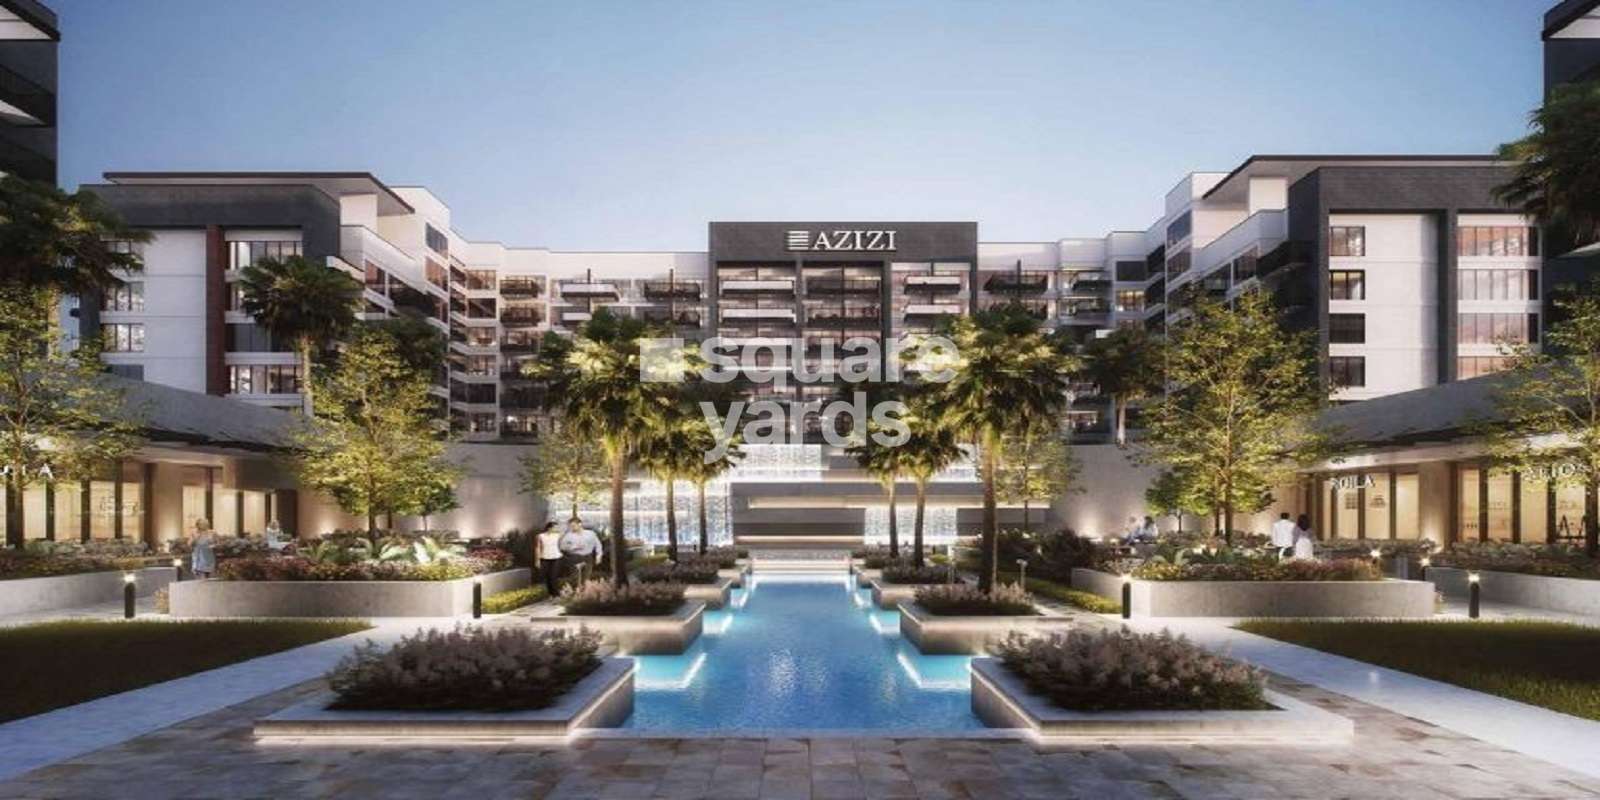 Azizi Beach Oasis Apartments Cover Image